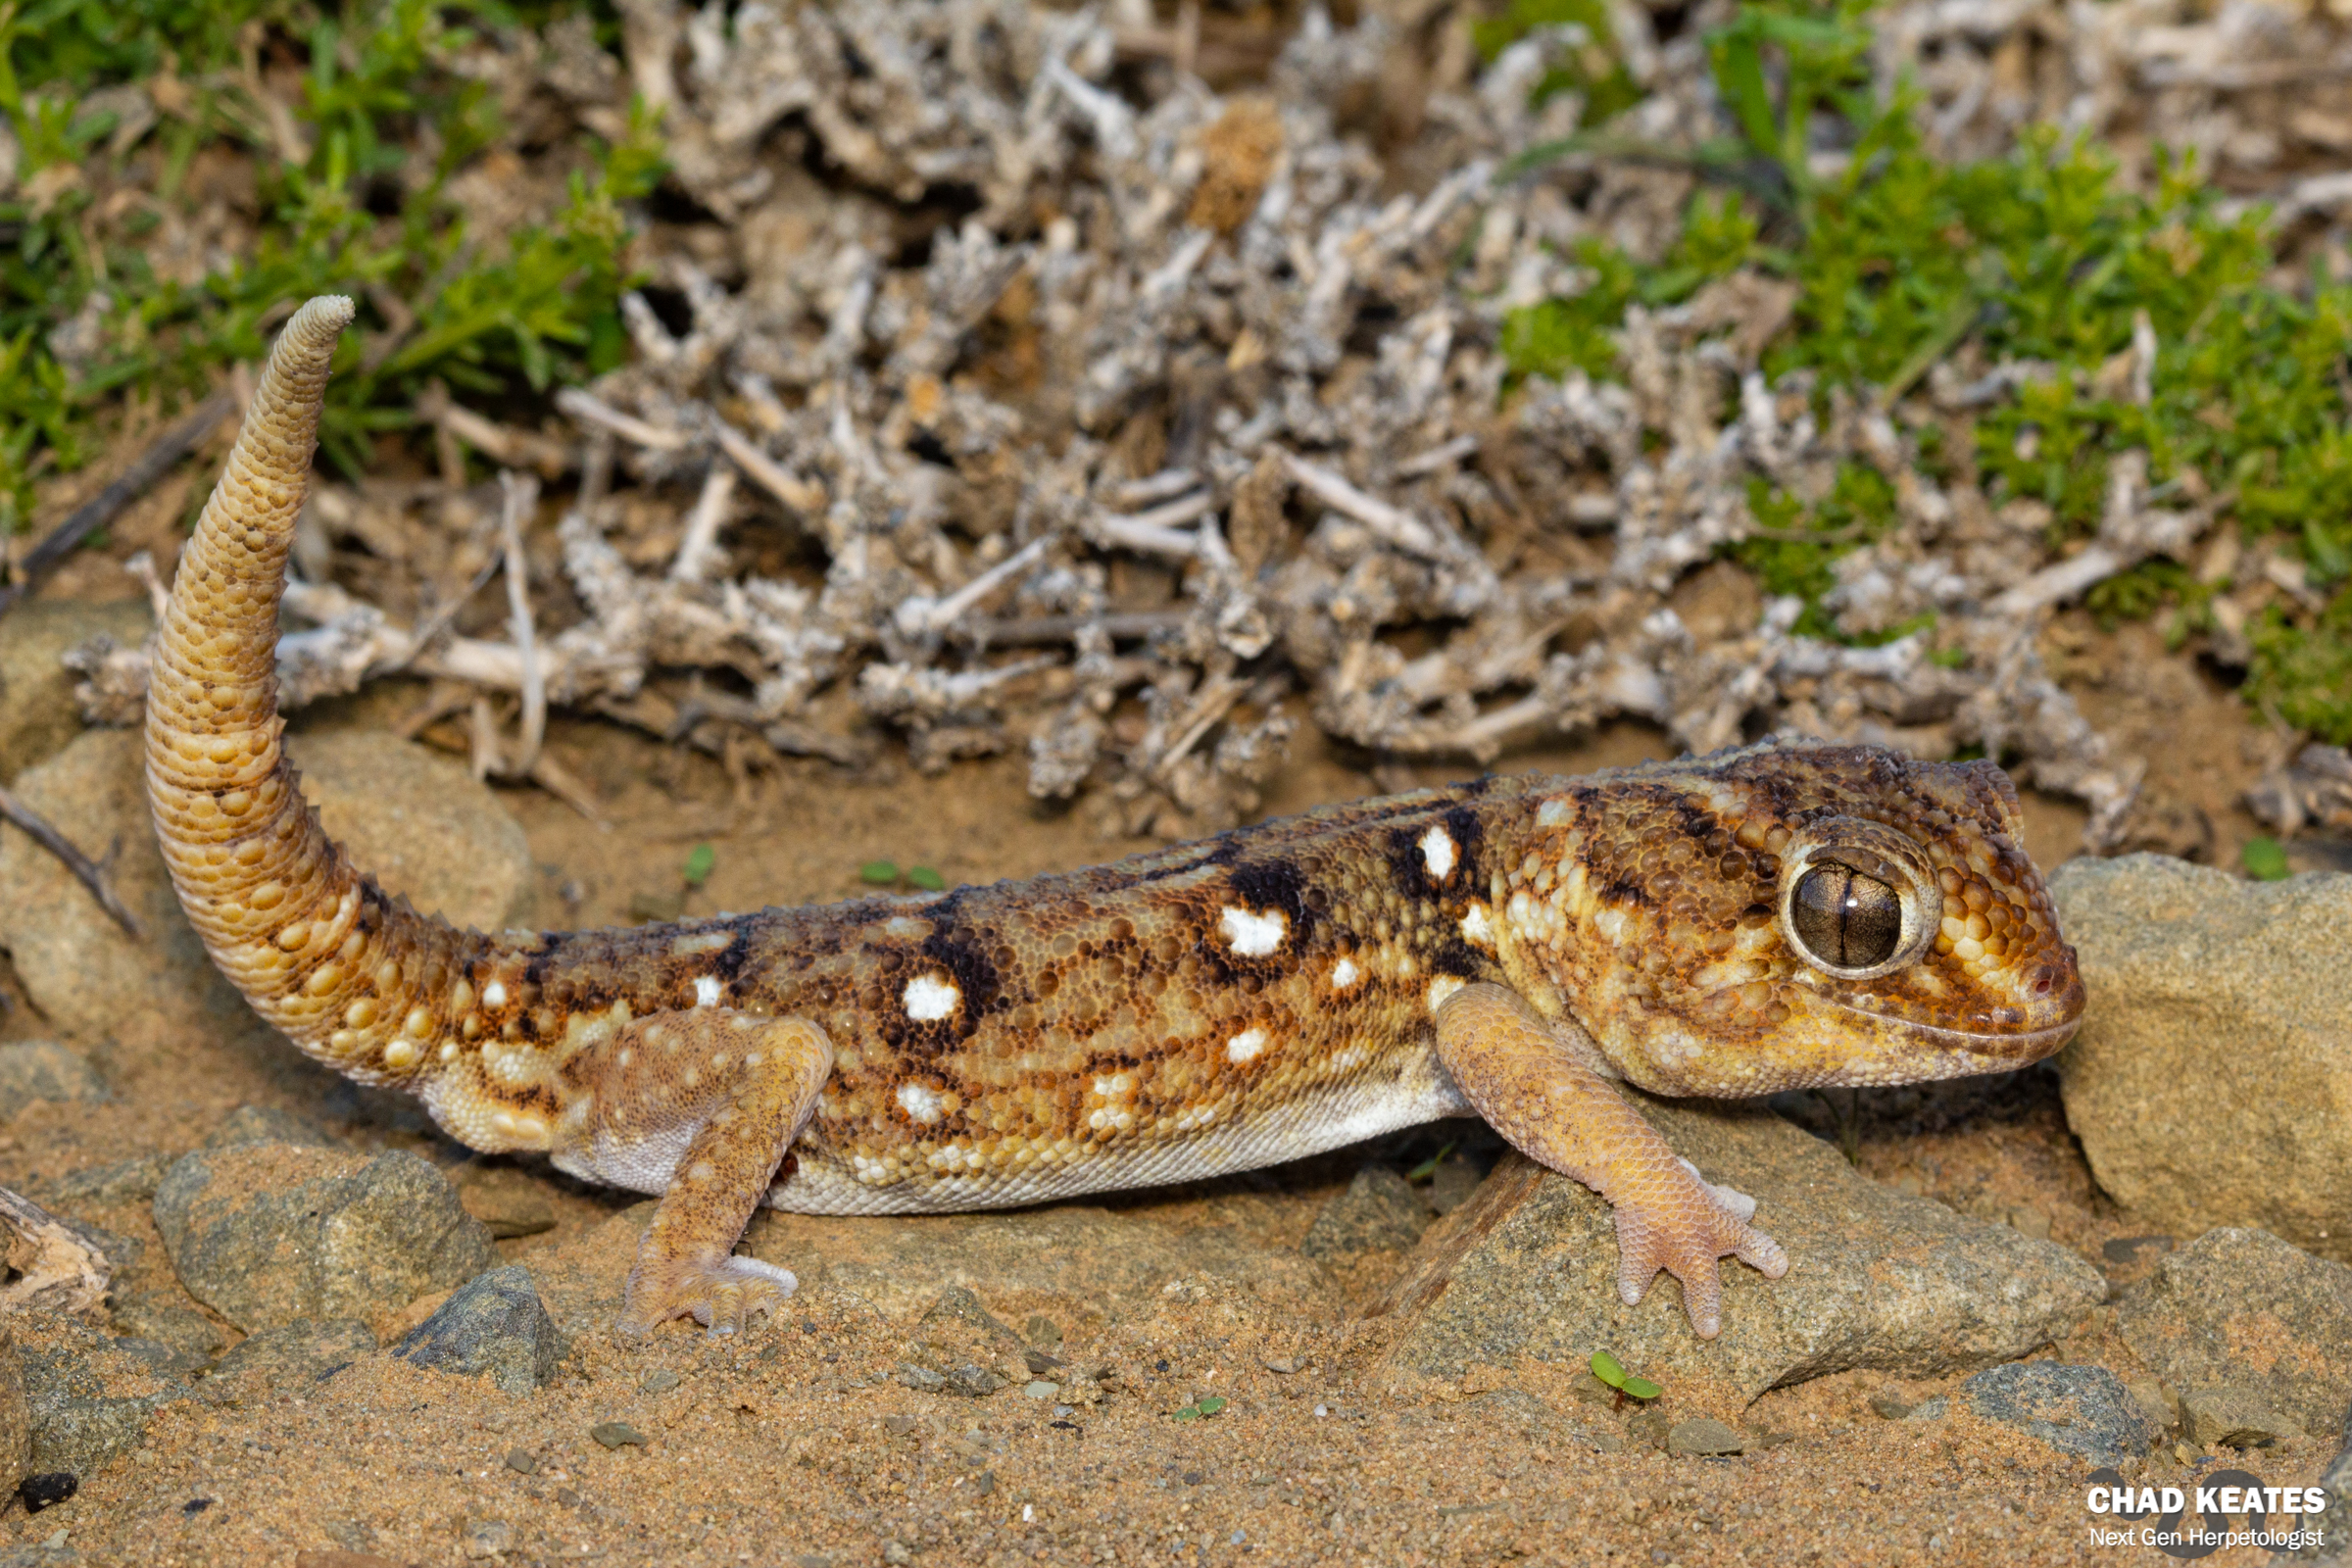 Chondrodactylus_angulifer_Giant_Ground_Gecko_Bitterfontein_Chad_Keates_2019 (5)